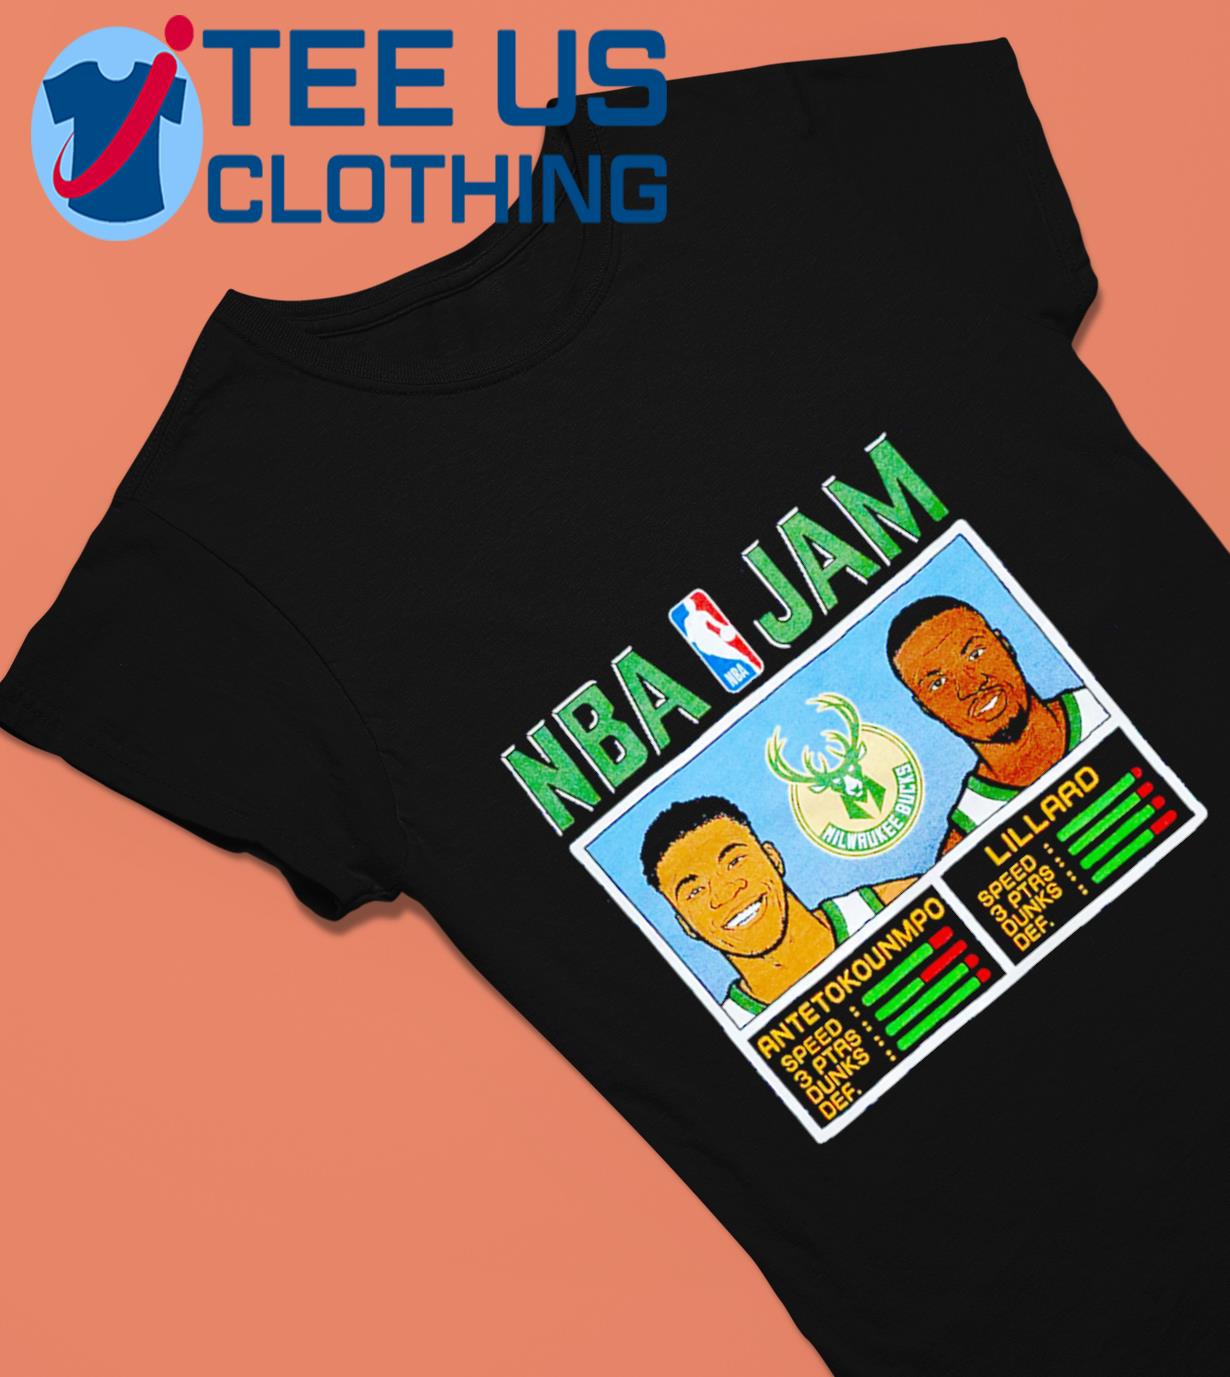 NBA Jam Antetokounmpo and Lillard Milwaukee Bucks Shirt, hoodie, sweater,  long sleeve and tank top